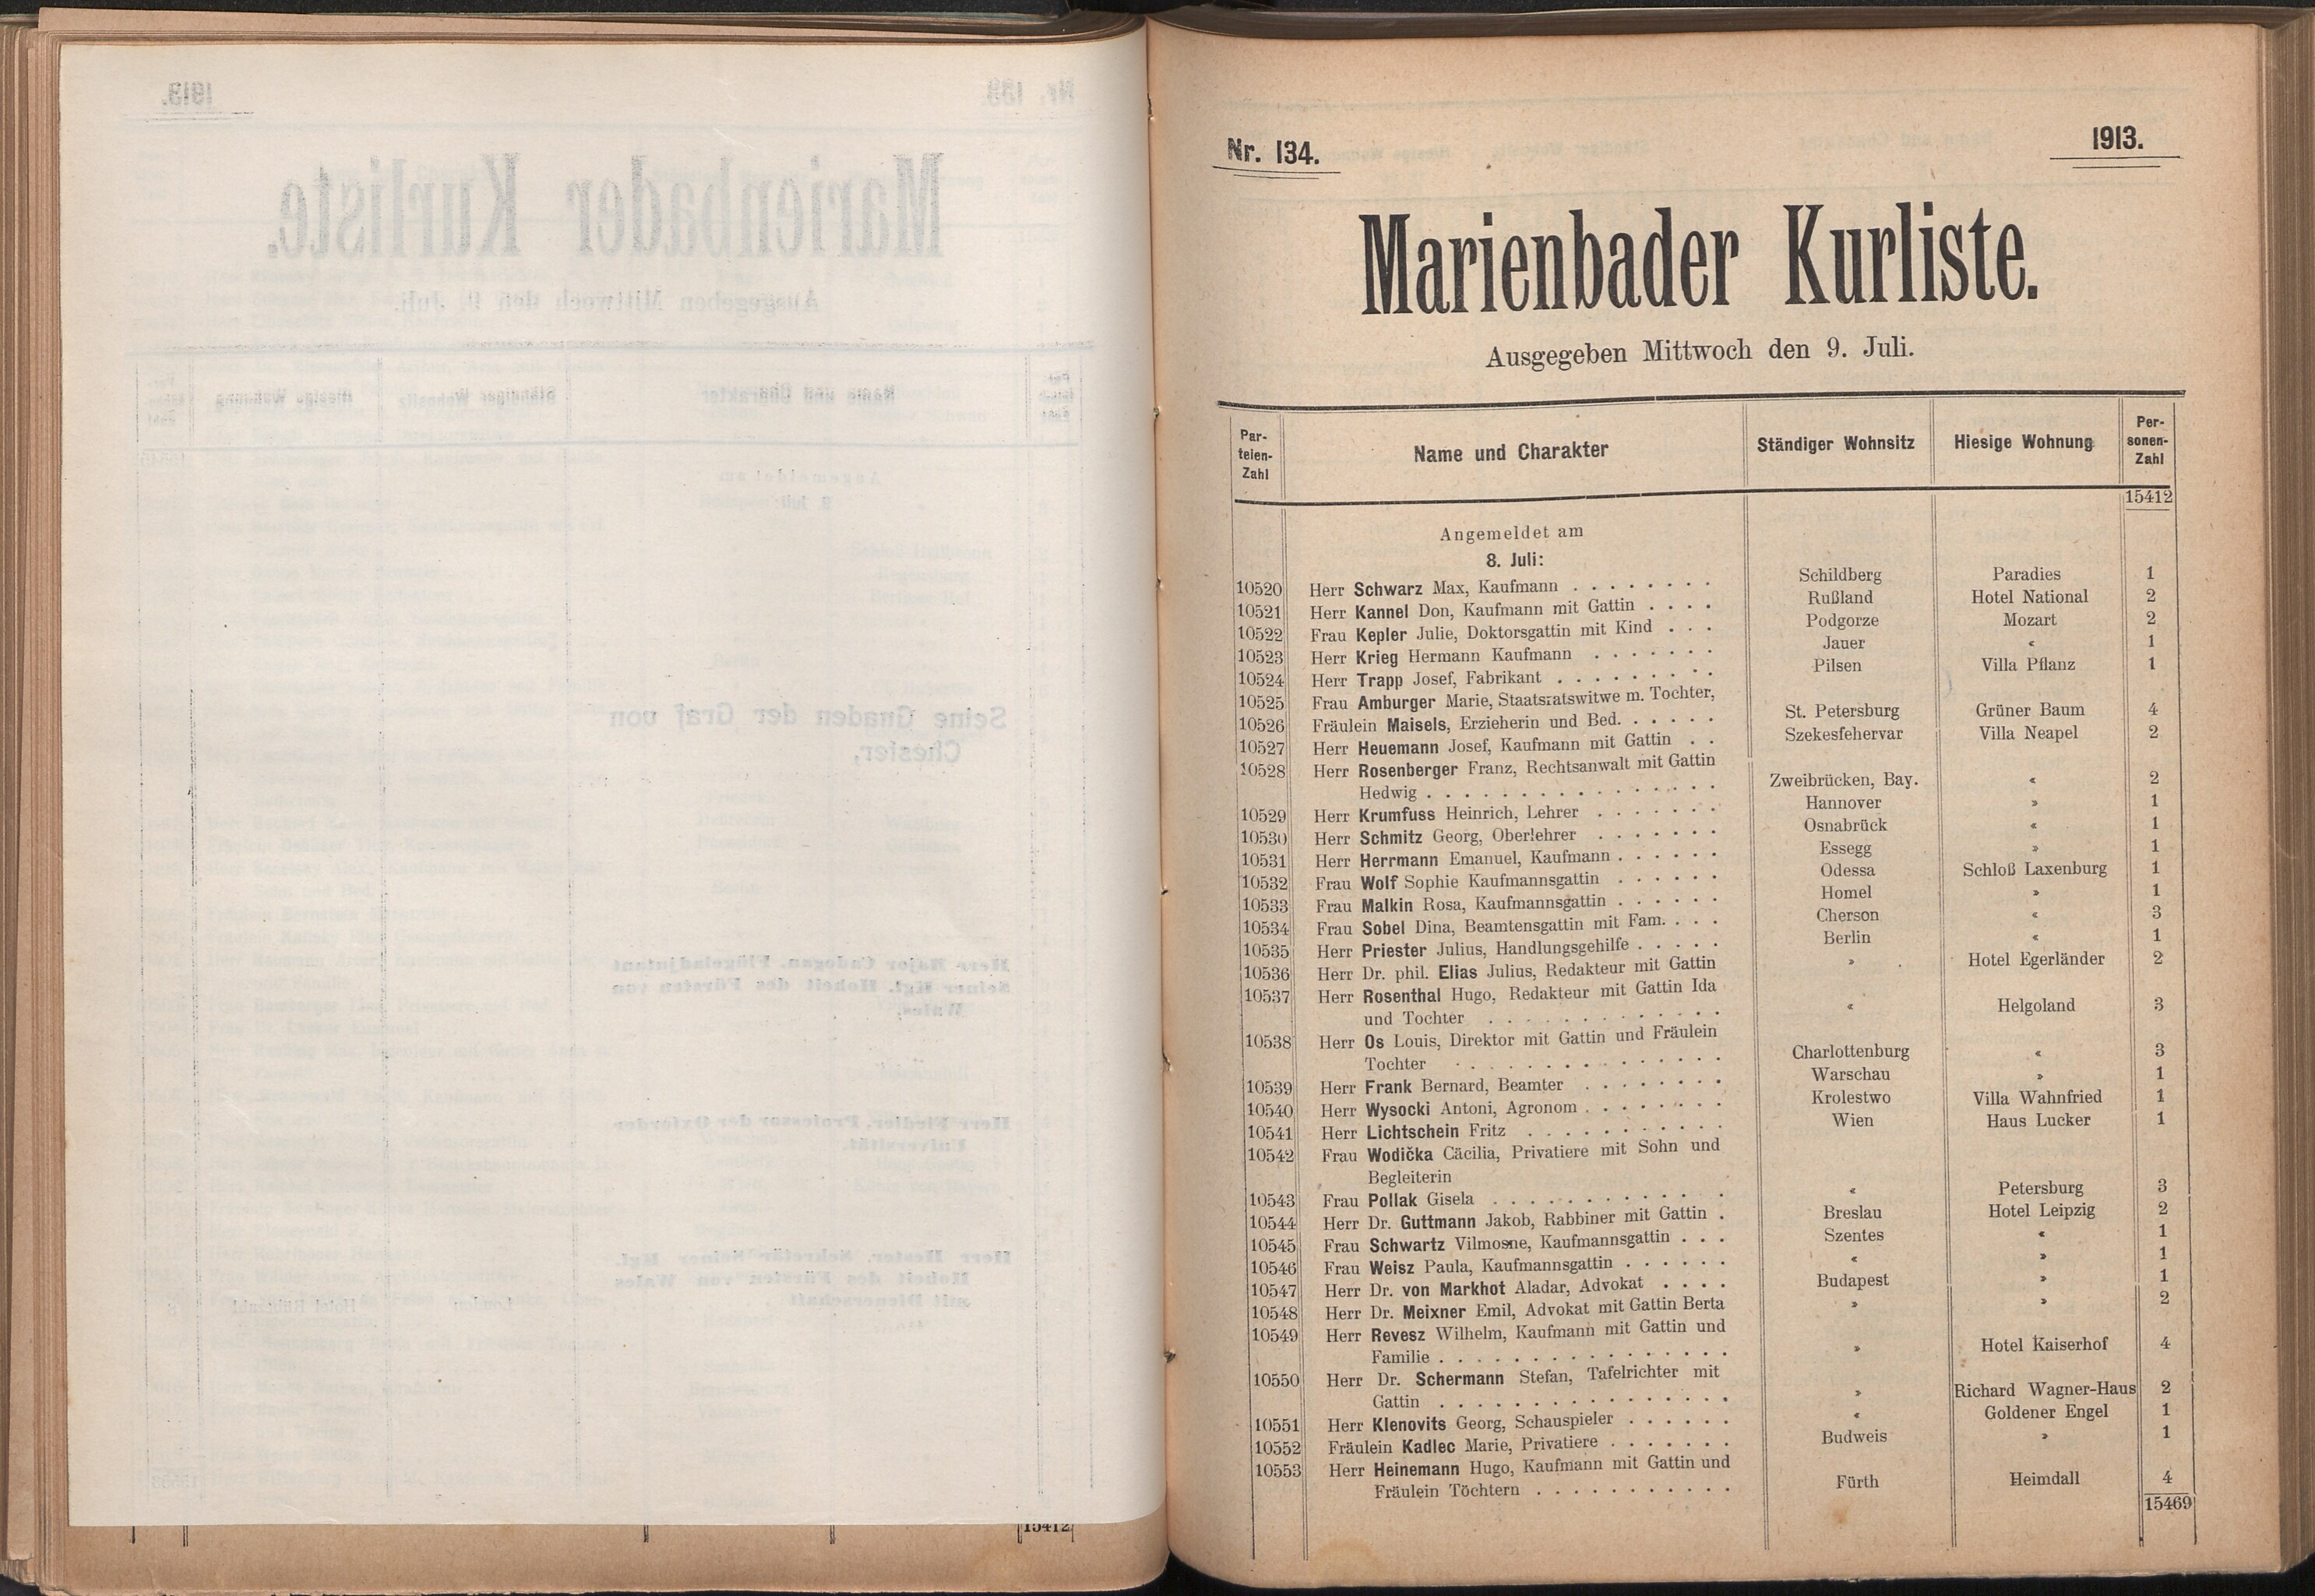 151. soap-ch_knihovna_marienbader-kurliste-1913_1510